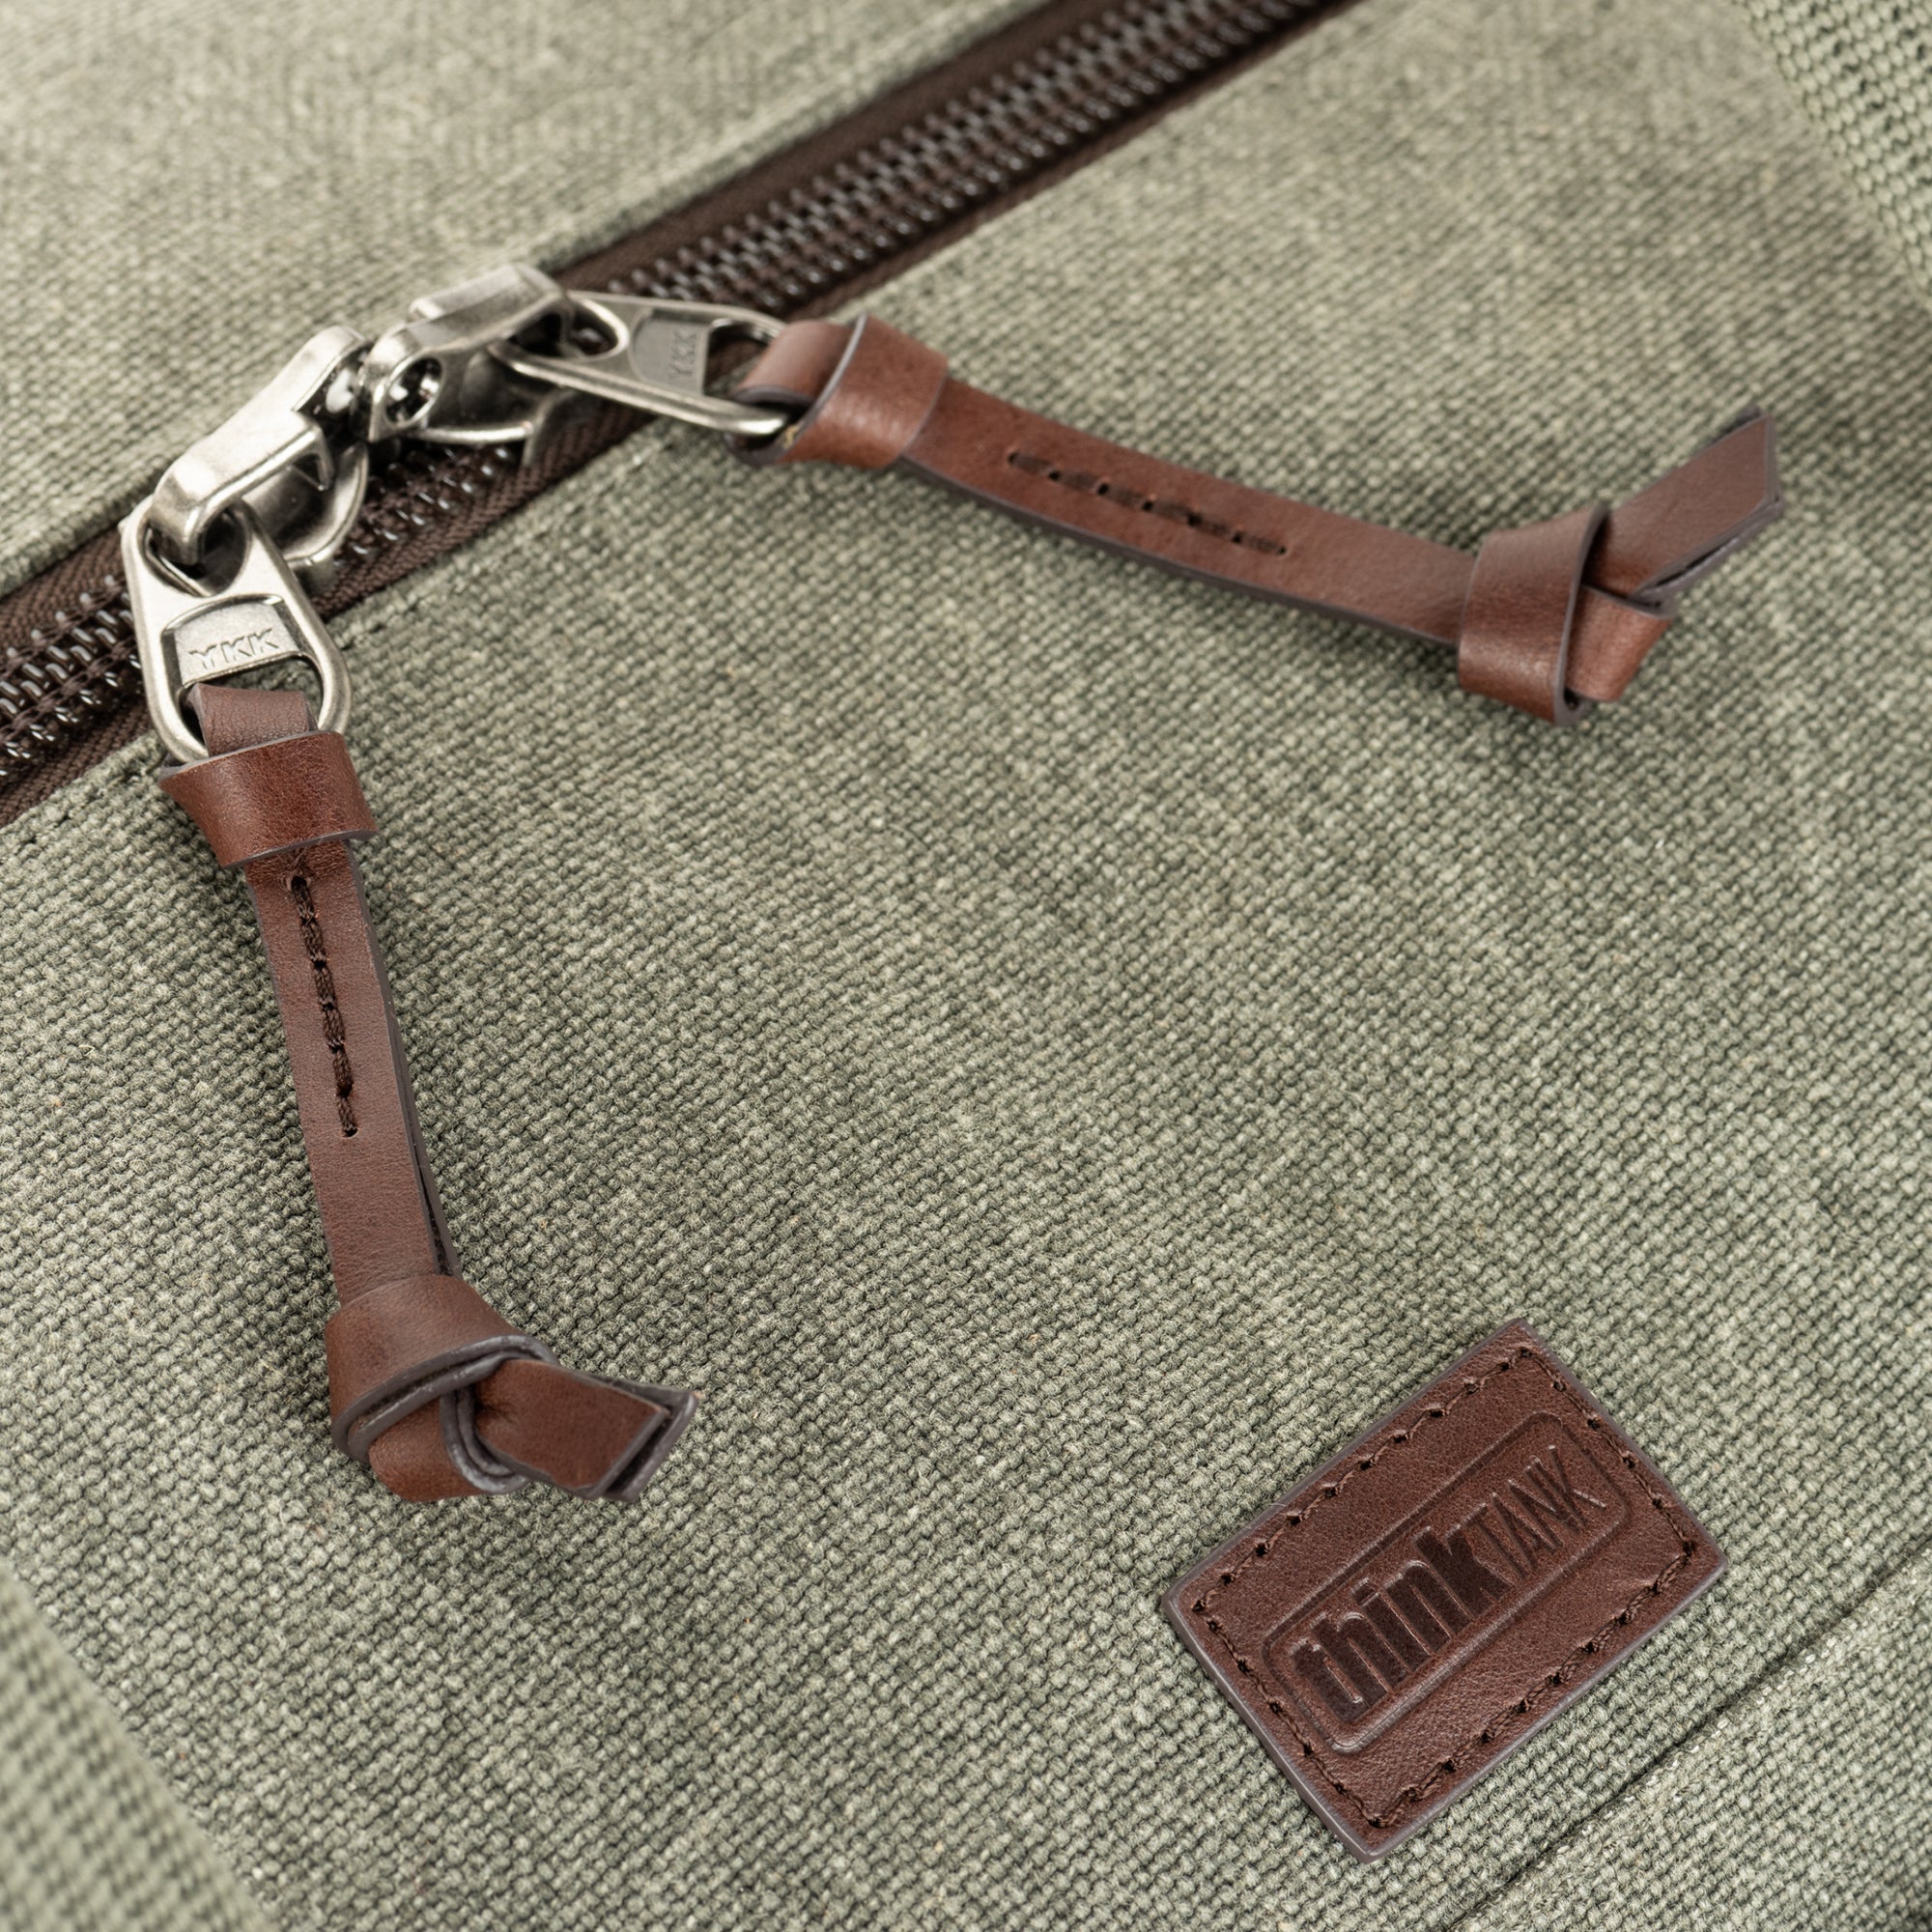 Full-grain Dakota leather zipper pulls